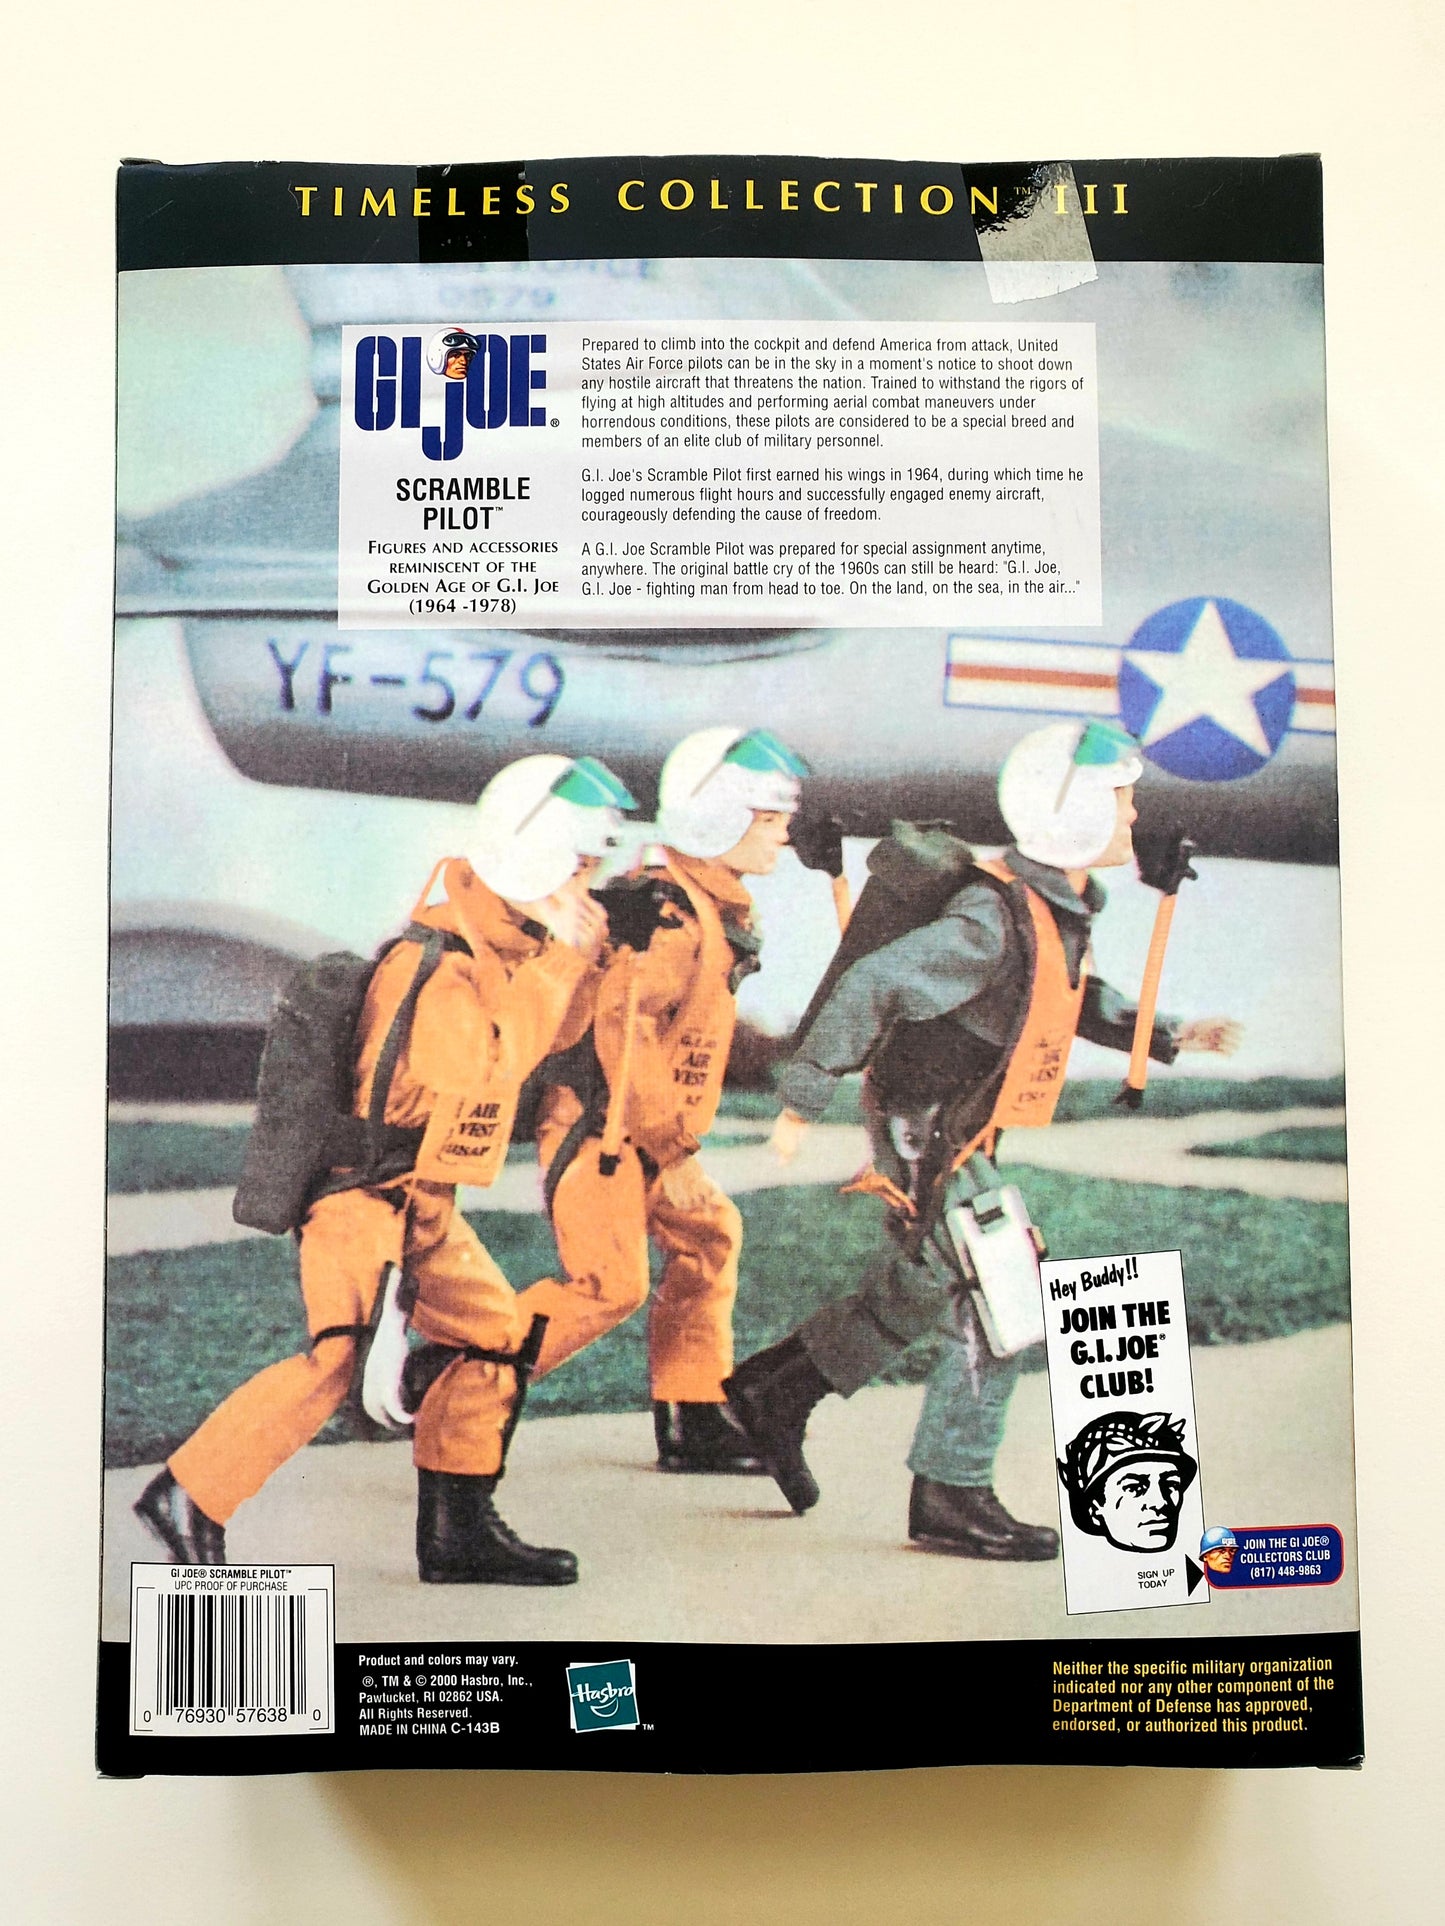 G.I. Joe Scramble Pilot (Caucasian) 12-Inch Action Figure